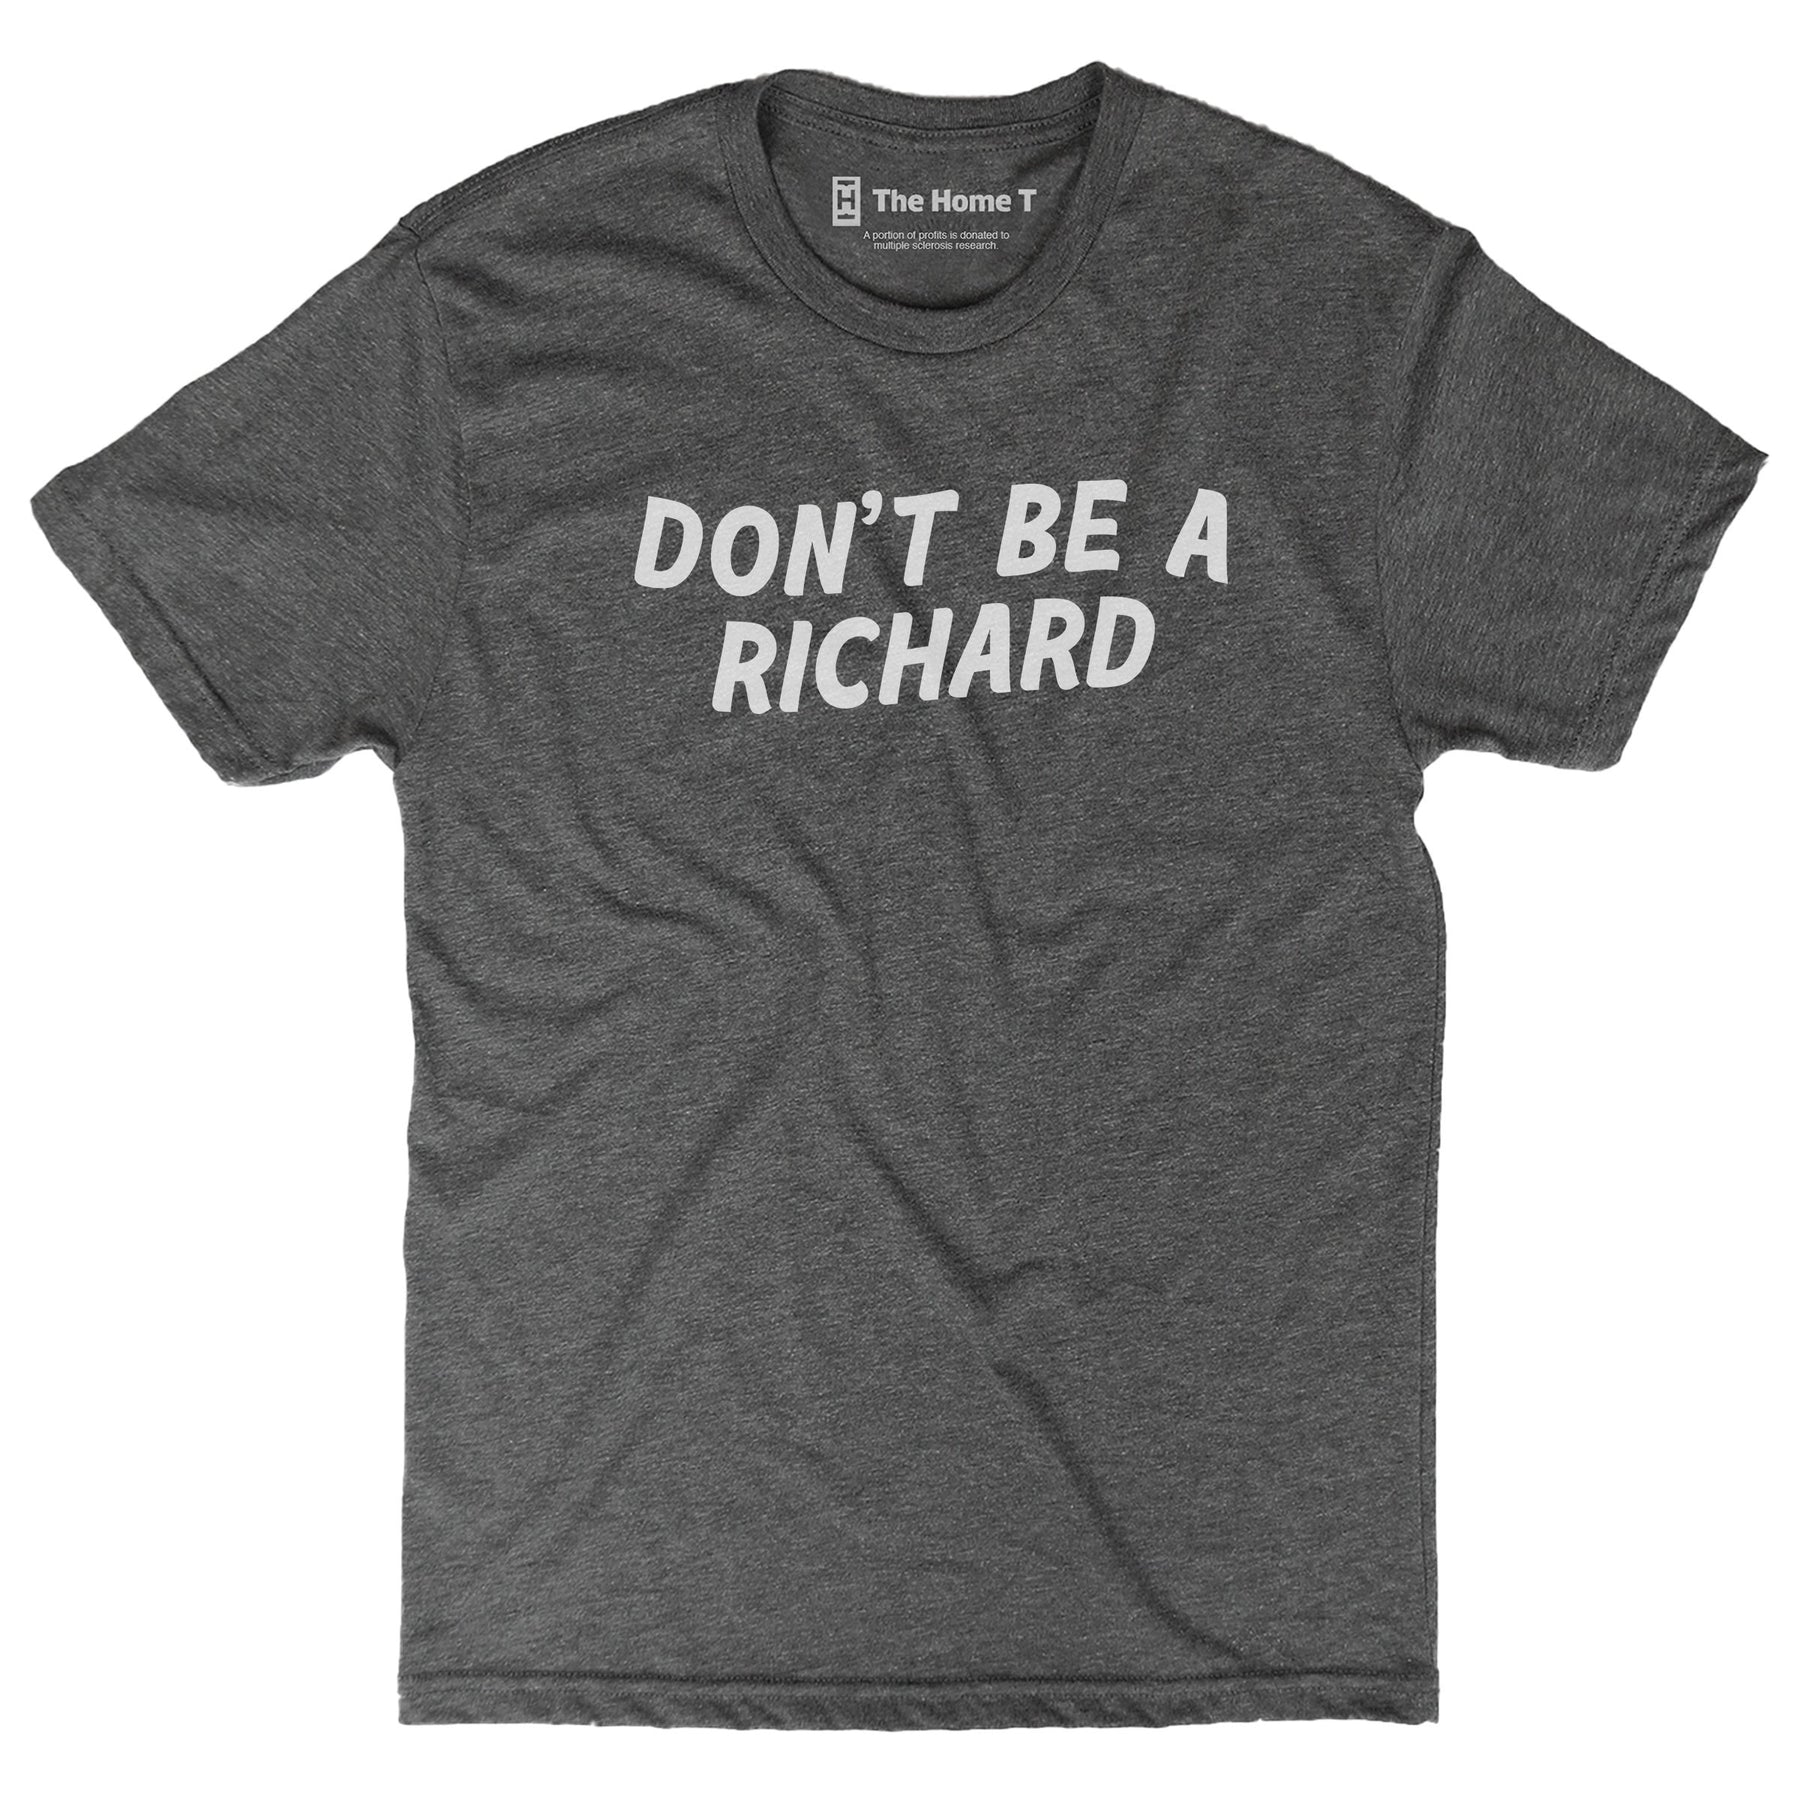 Don't be a Richard. Dark grey crew